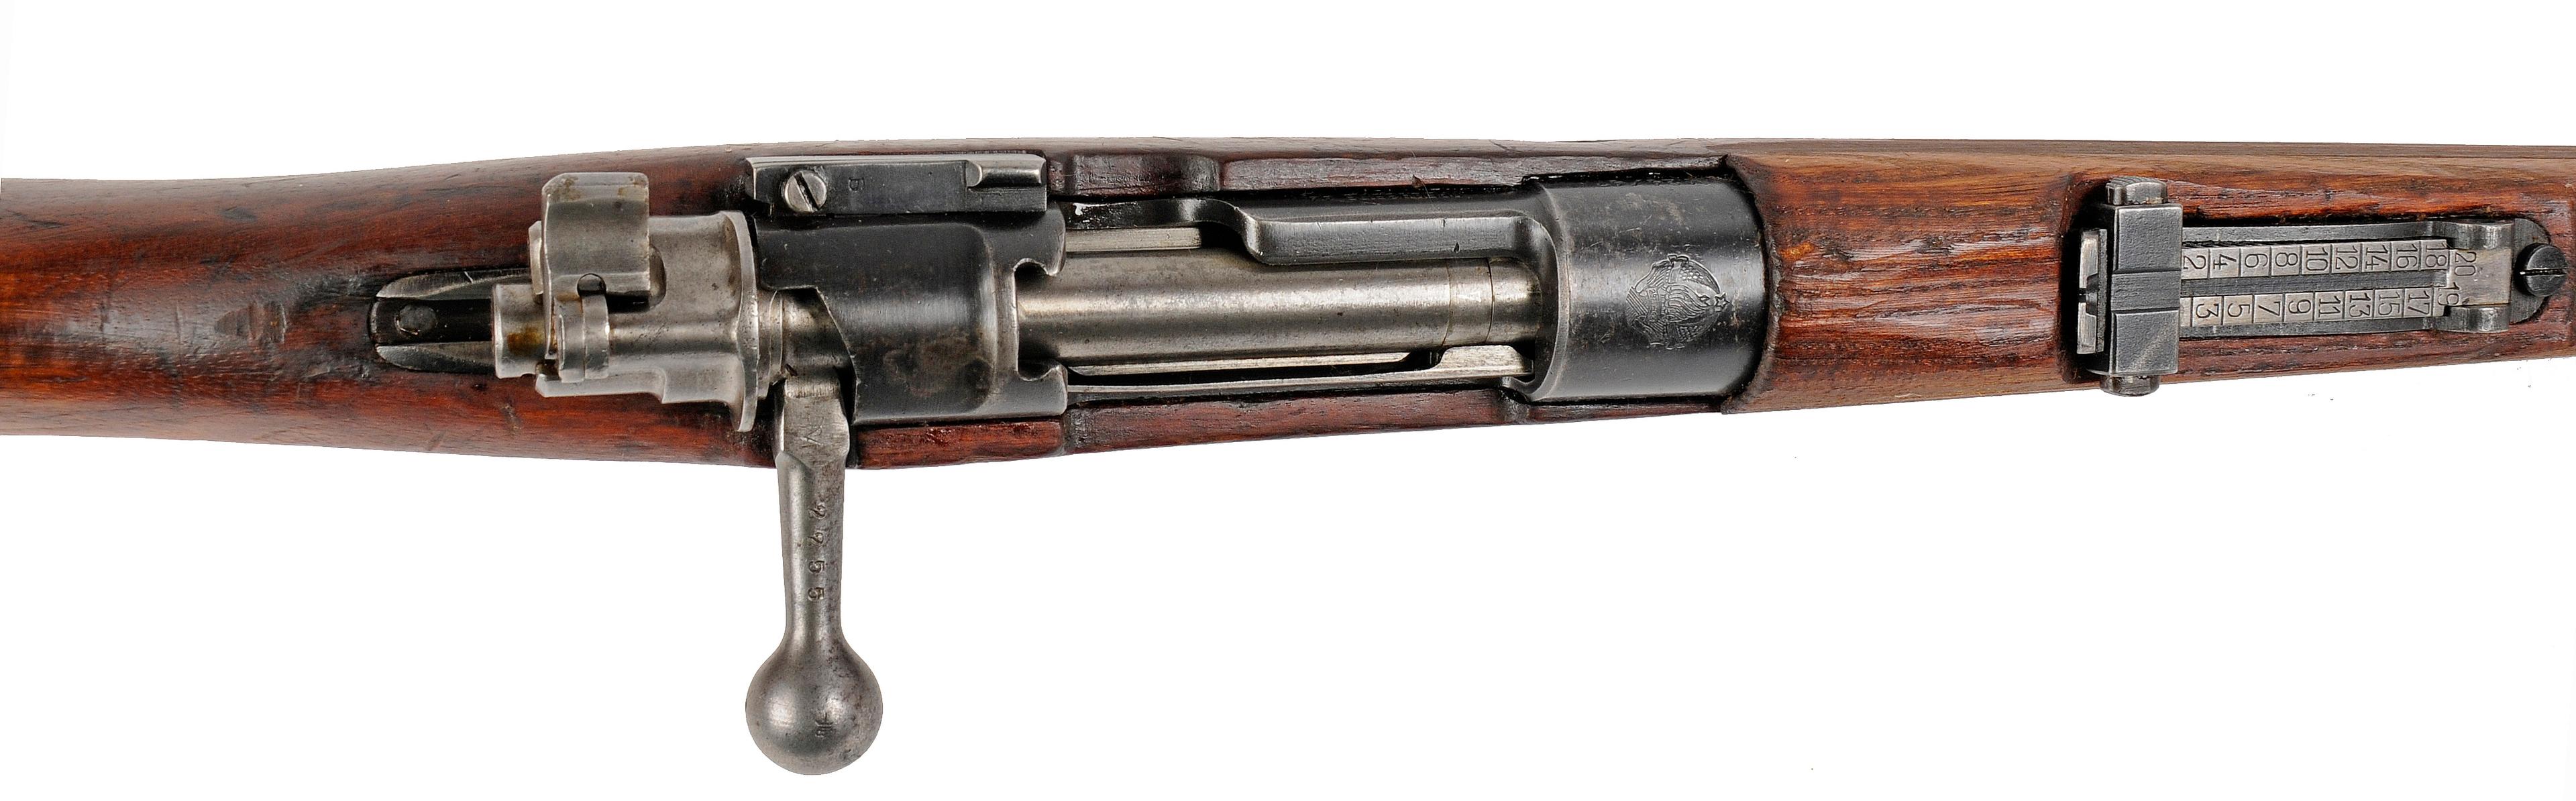 Yugoslavian Military Model 24/47 8mm Mauser Bolt-Action Rifle - FFL # M2255 (RMD 1)